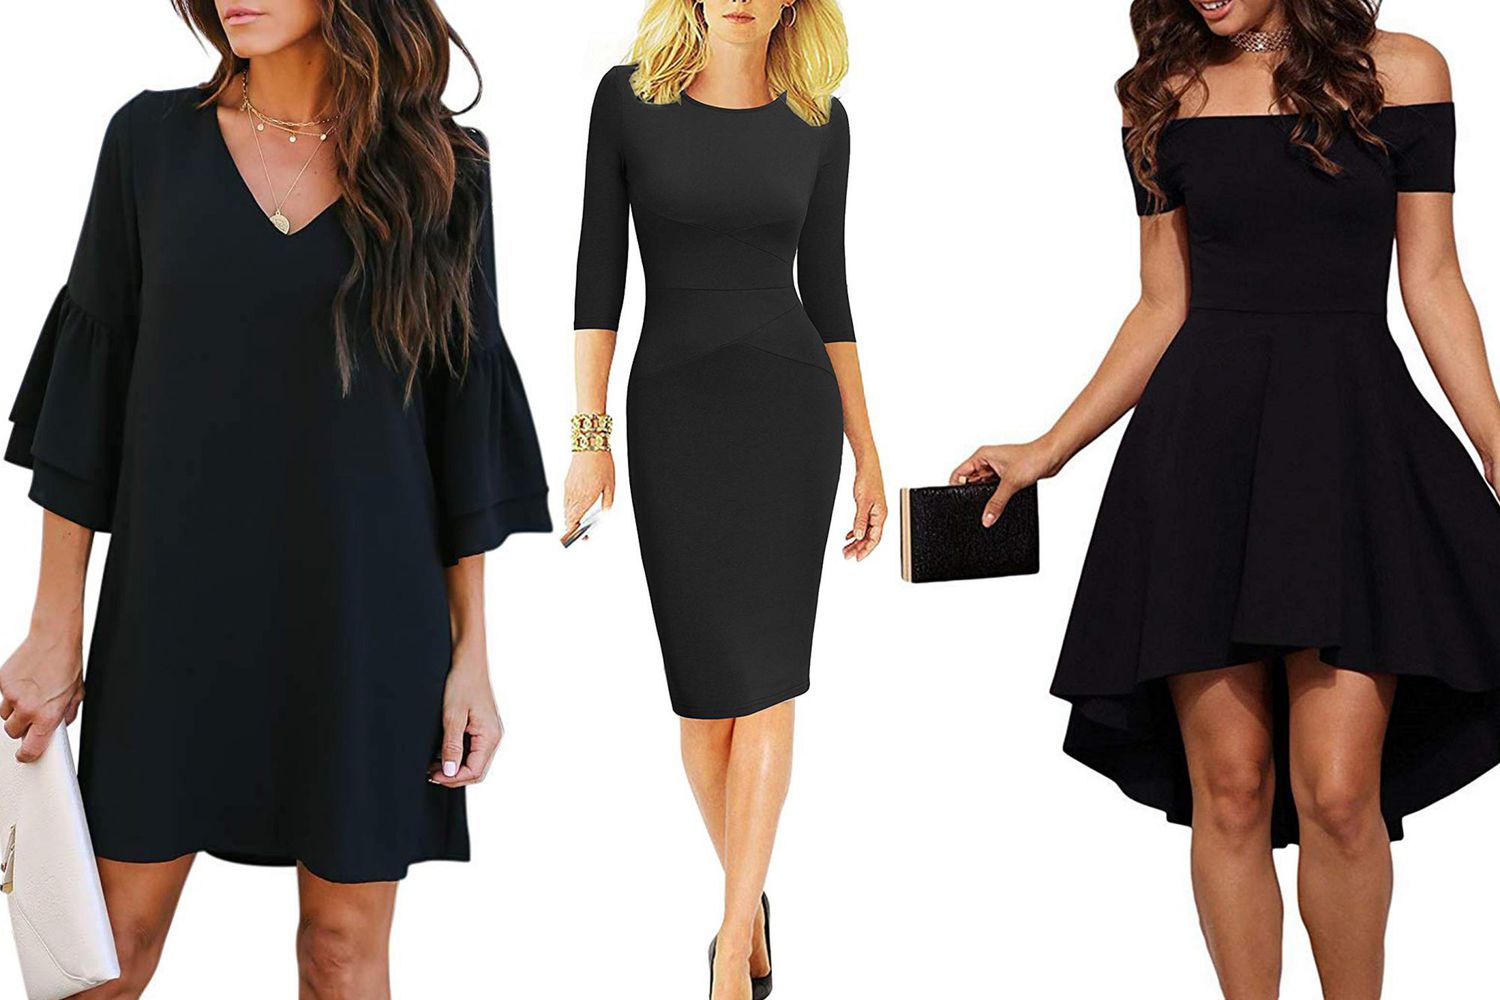 Simple black Dress Amazon